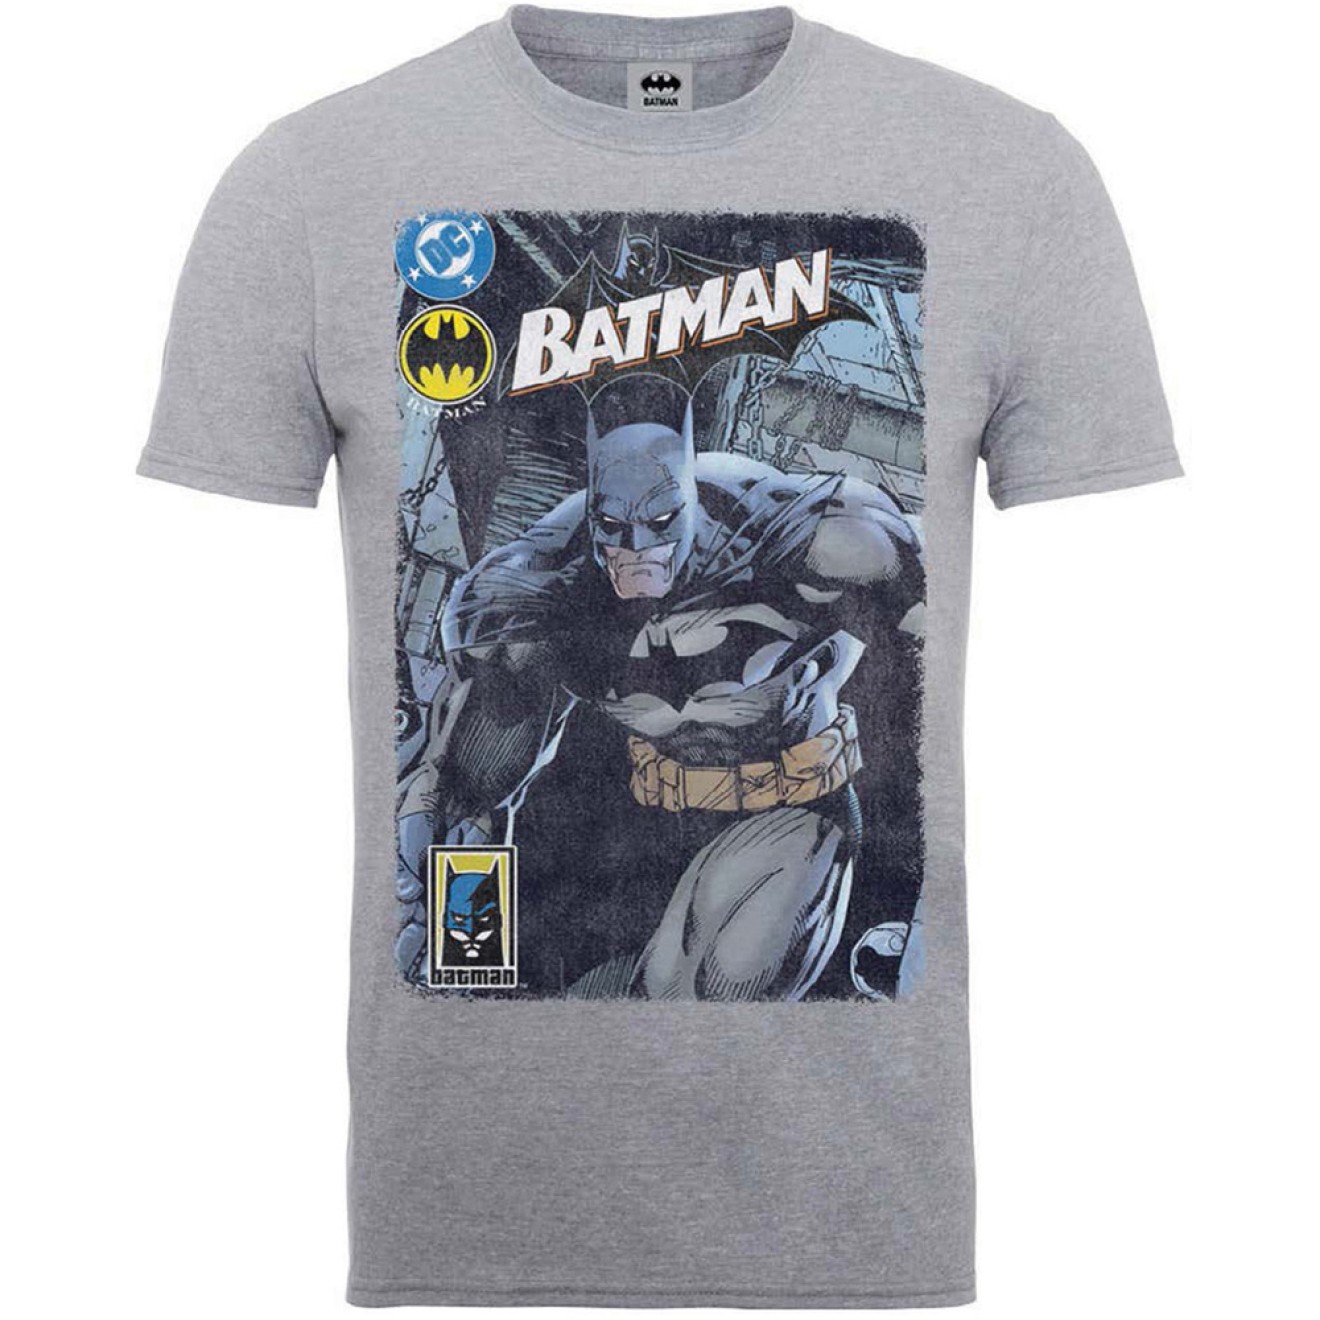 Batman - Urban Legend T-shirt